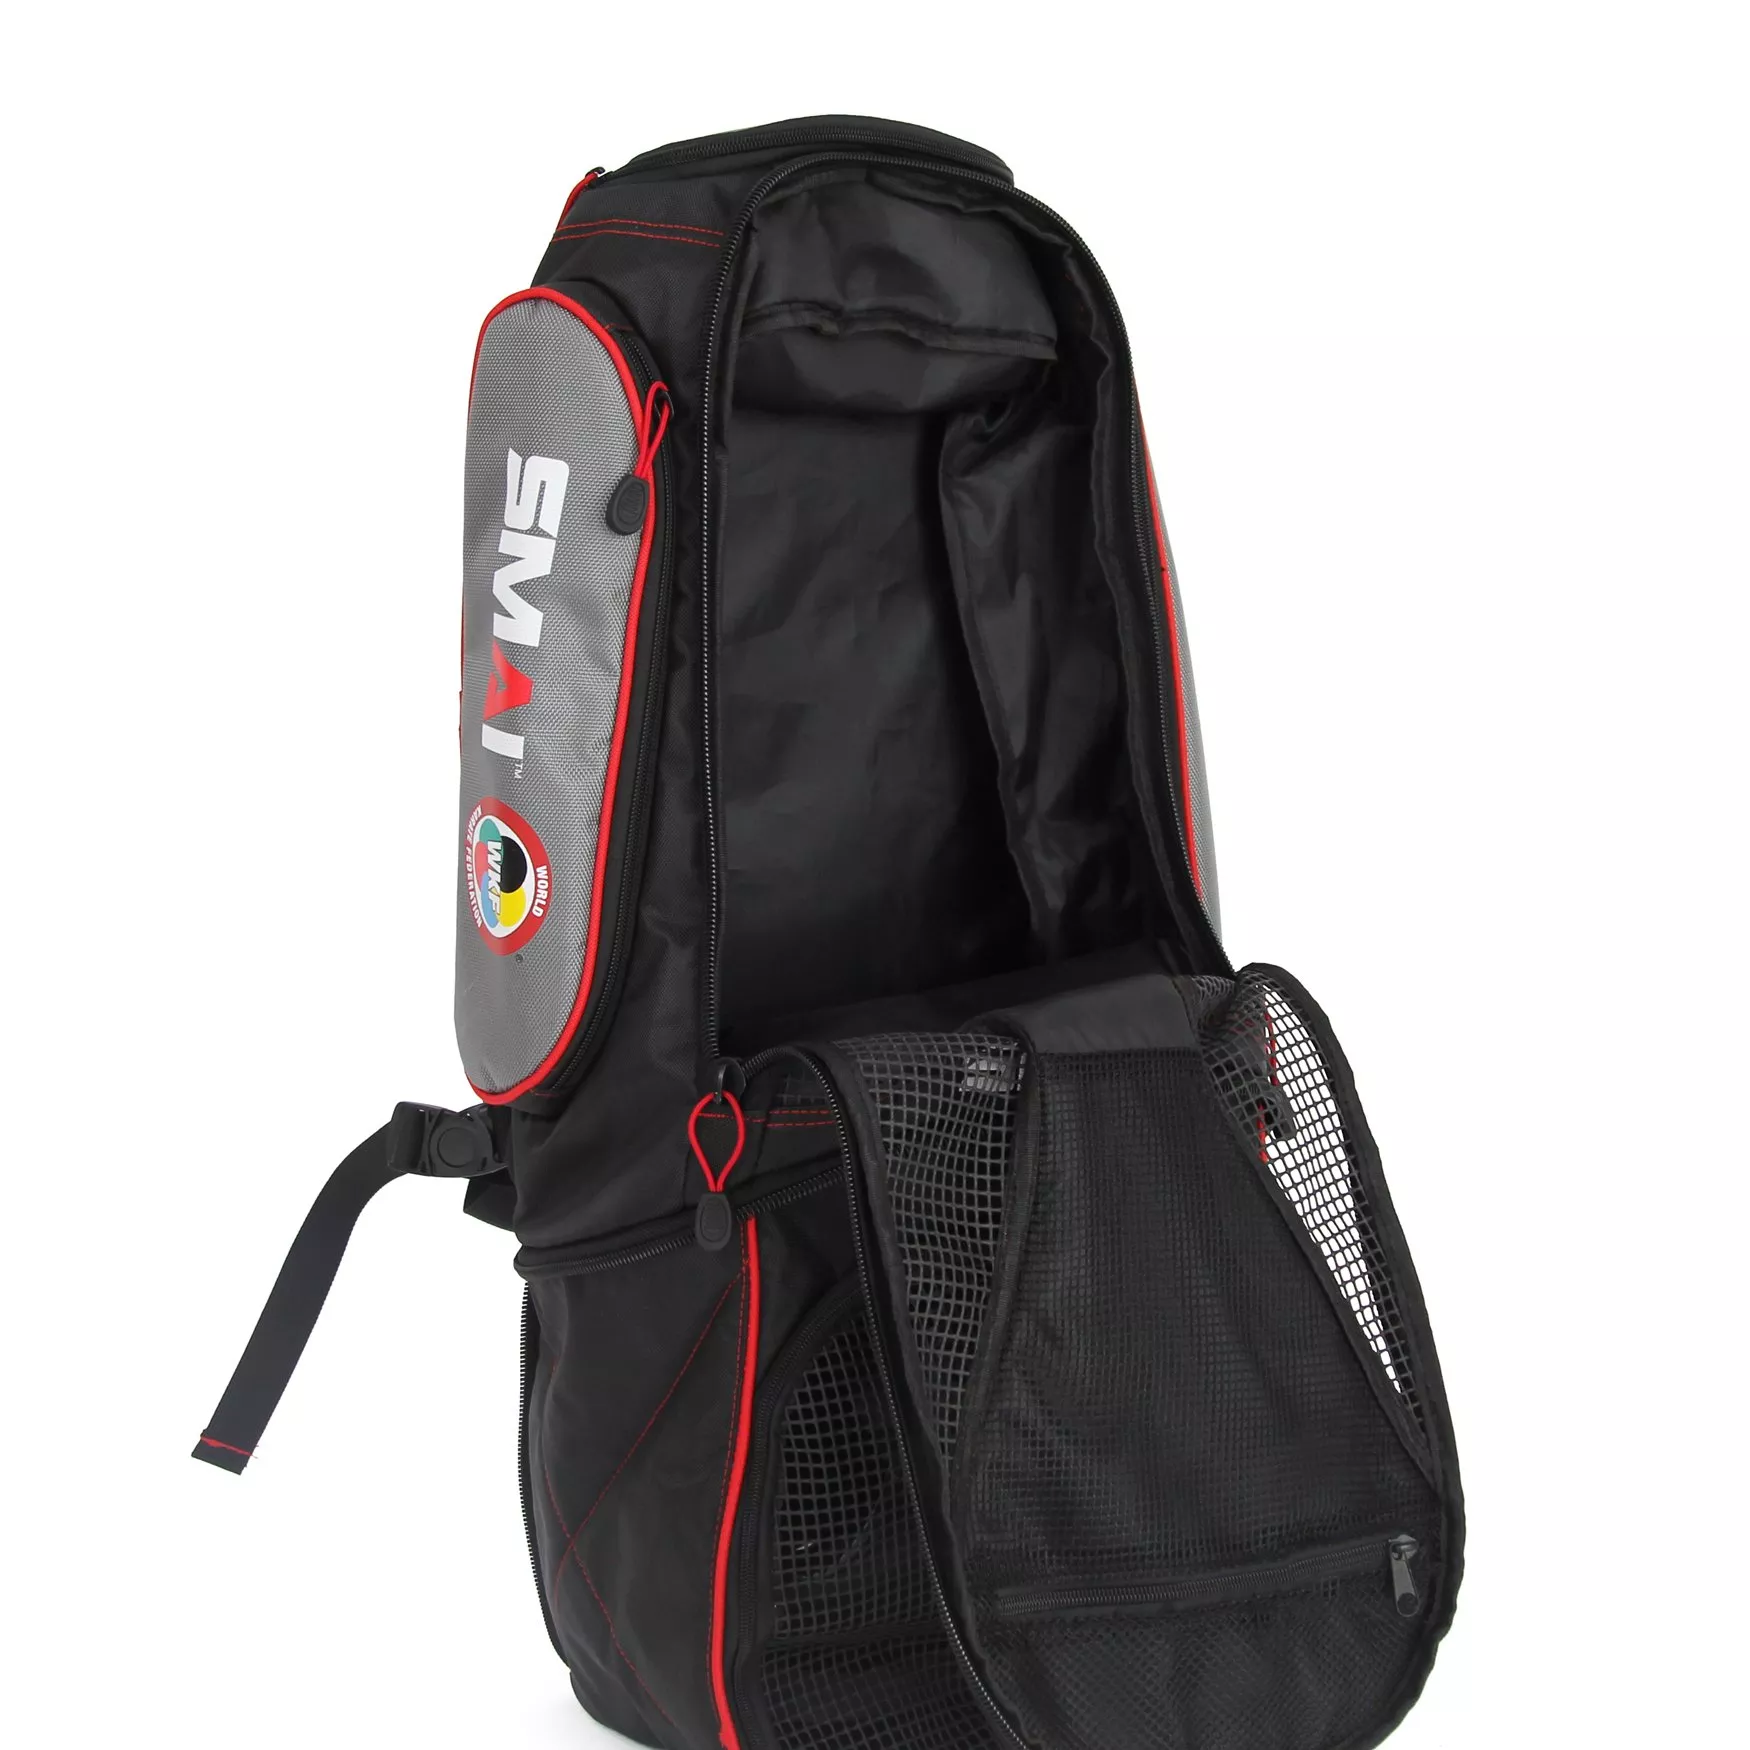 Рюкзак Smai WKF Preformance Backpack Чорно-червоний-69х41х23см